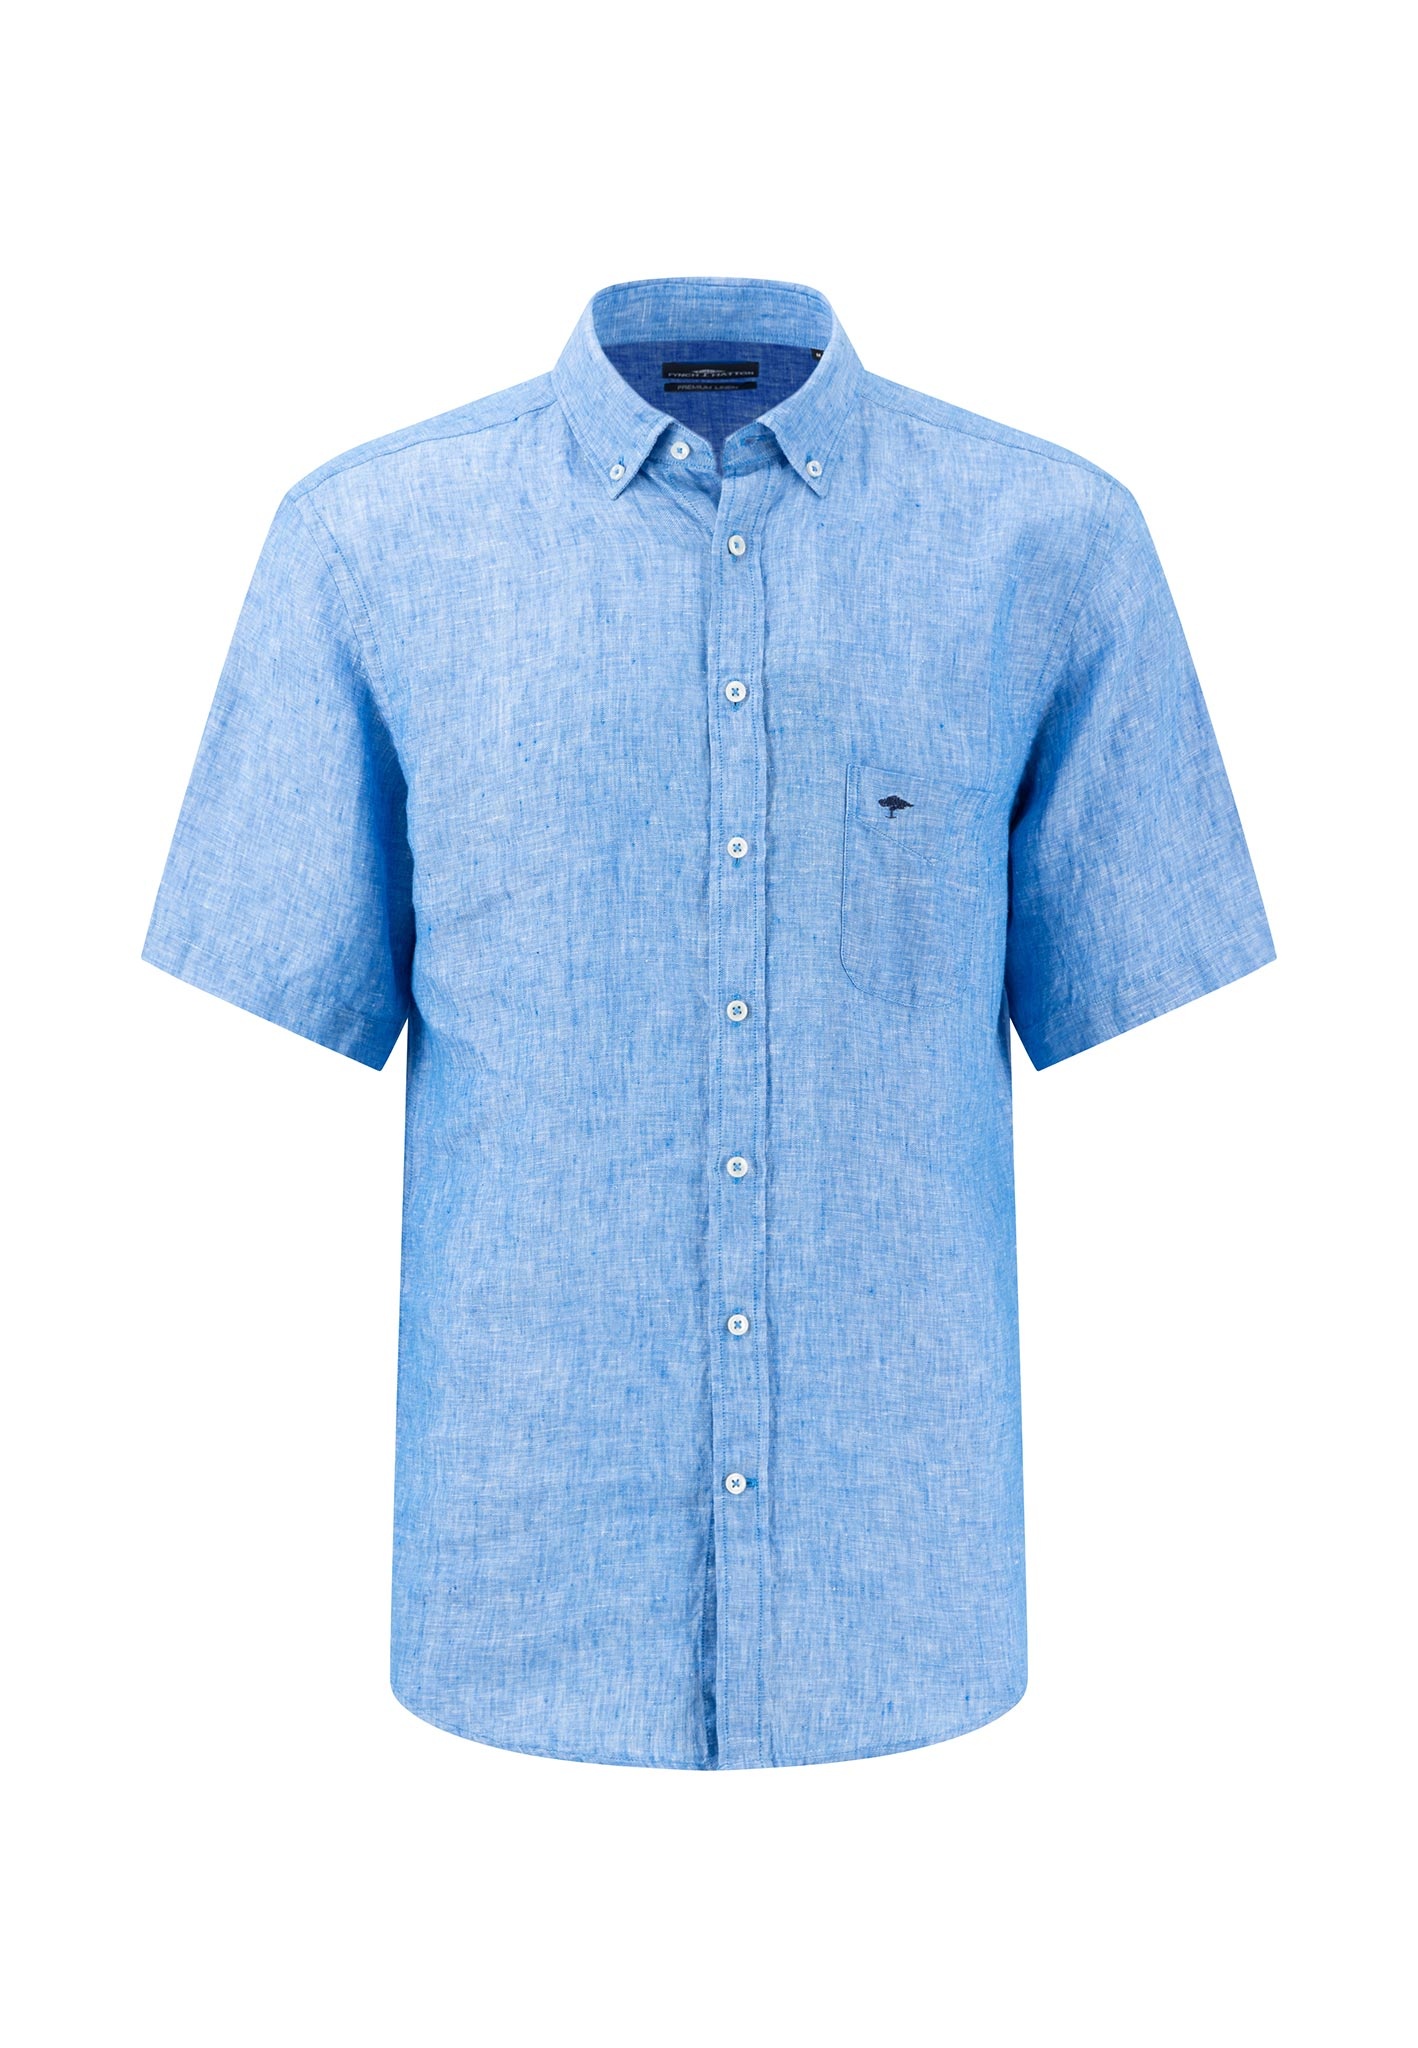 Fynch Hatton Overhemd SSinnen Vibrant Blauw 